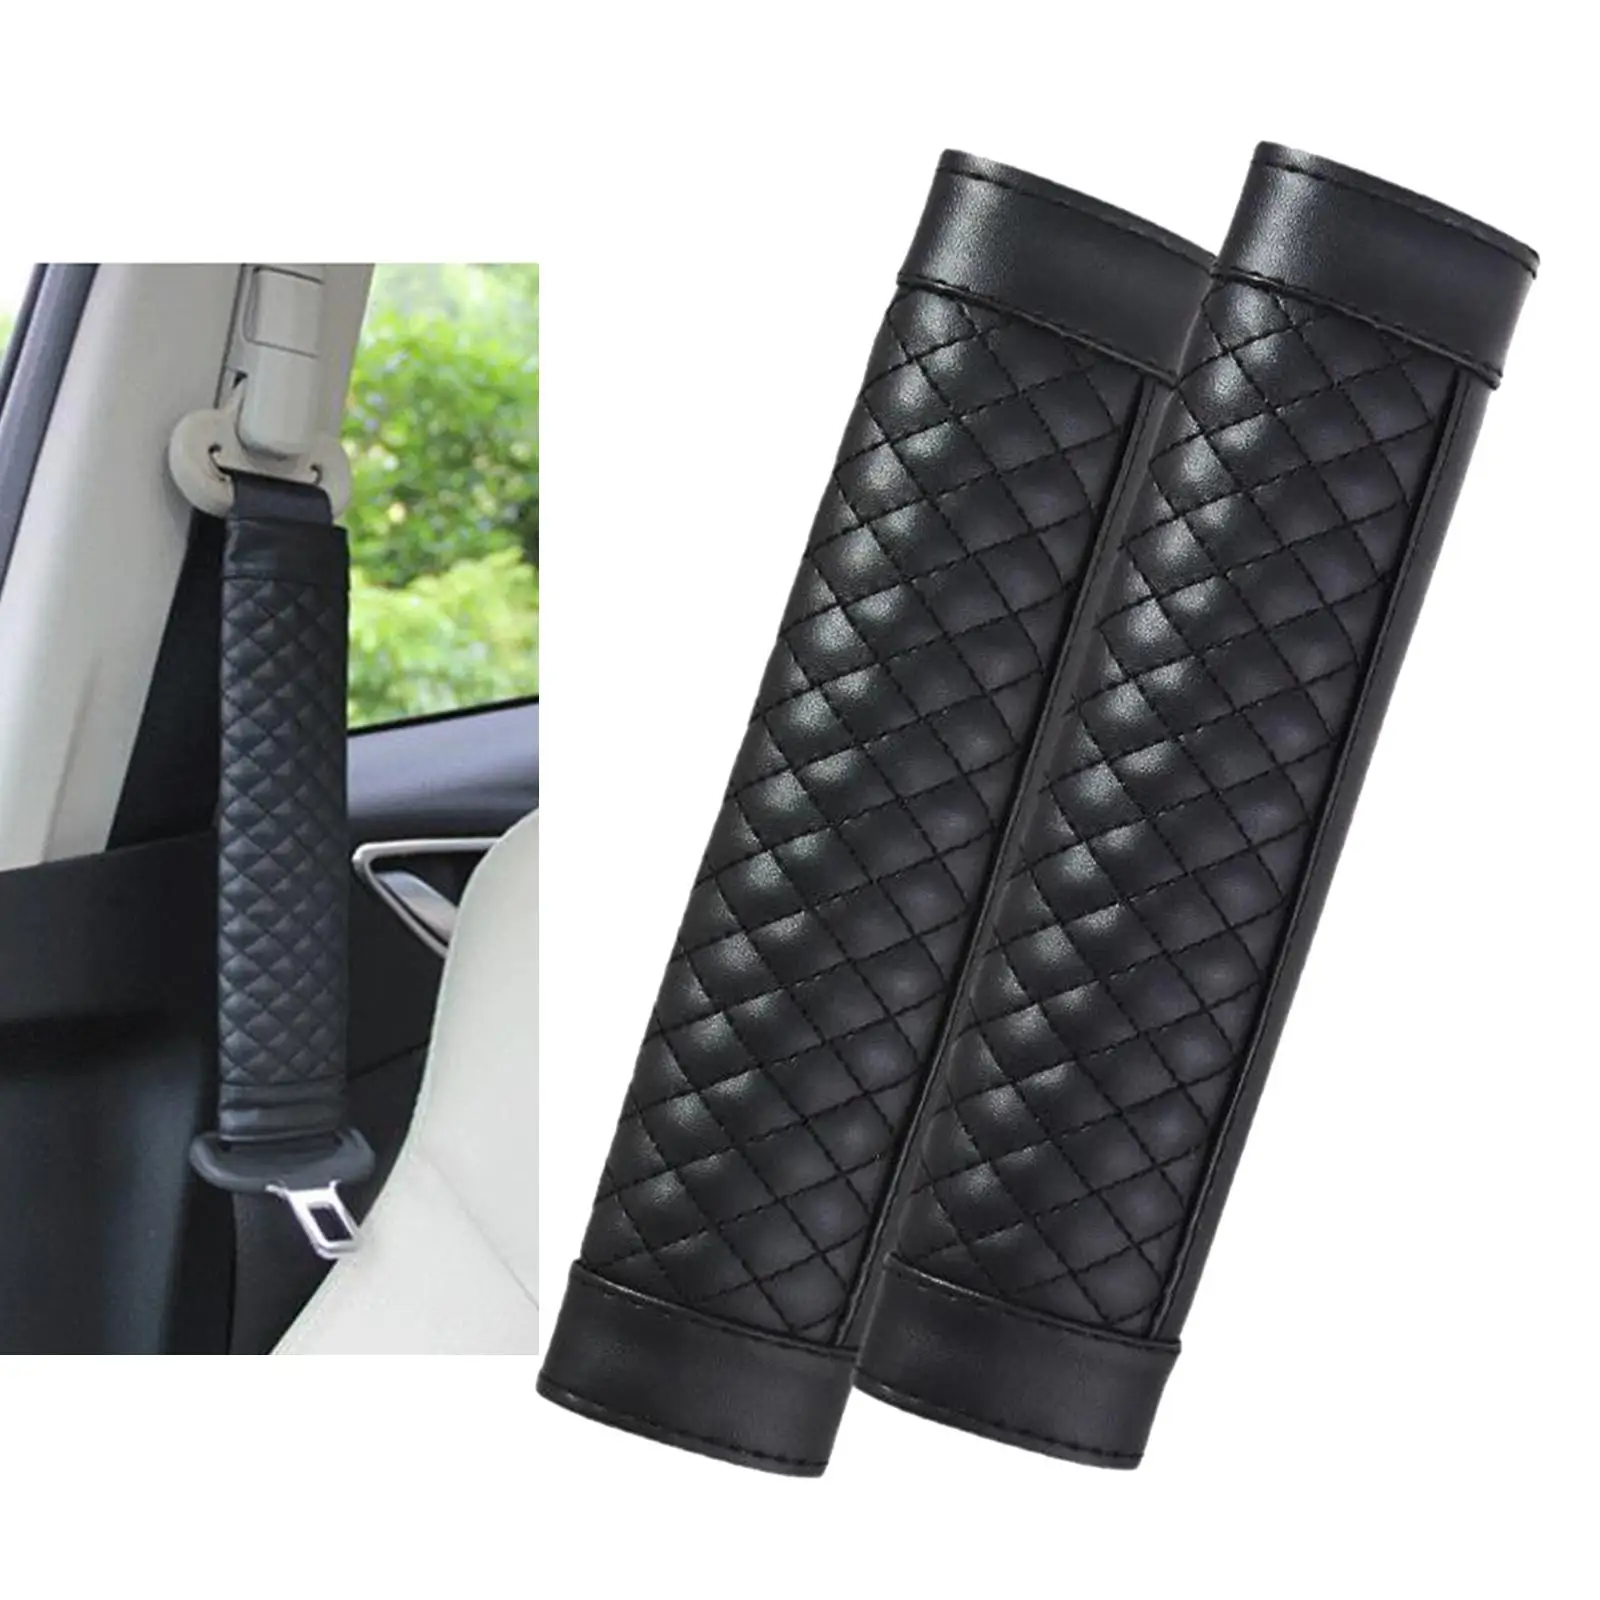 Driving Auto Car PU Seatbelt Seat Belt Pads Bag Harness Cover